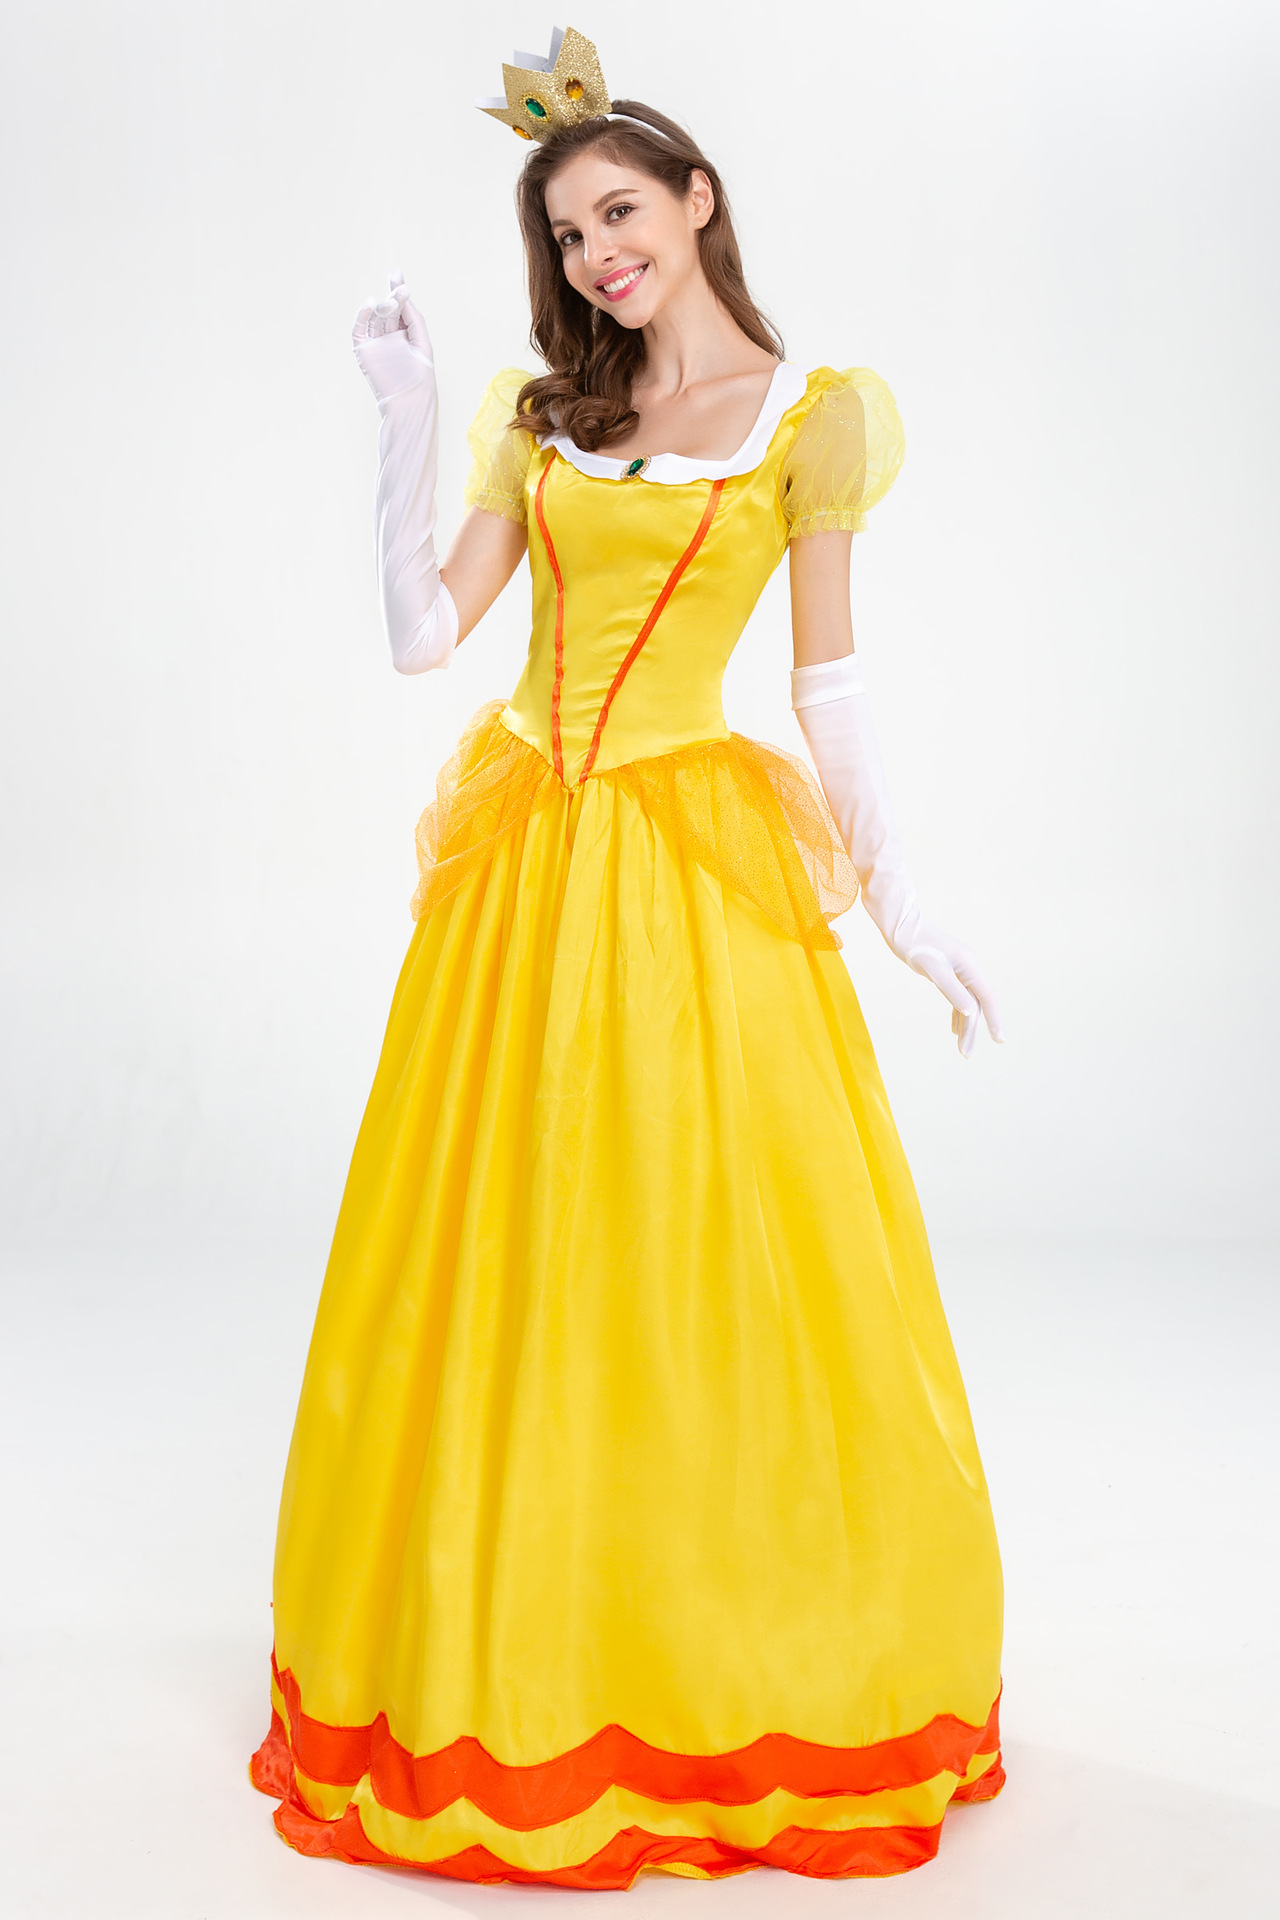 Princess Daisy Costume Dress for Women, Princess Peach Dress Up, Super  Mario Party, Womens Halloween Costume, Cosplay Costume 